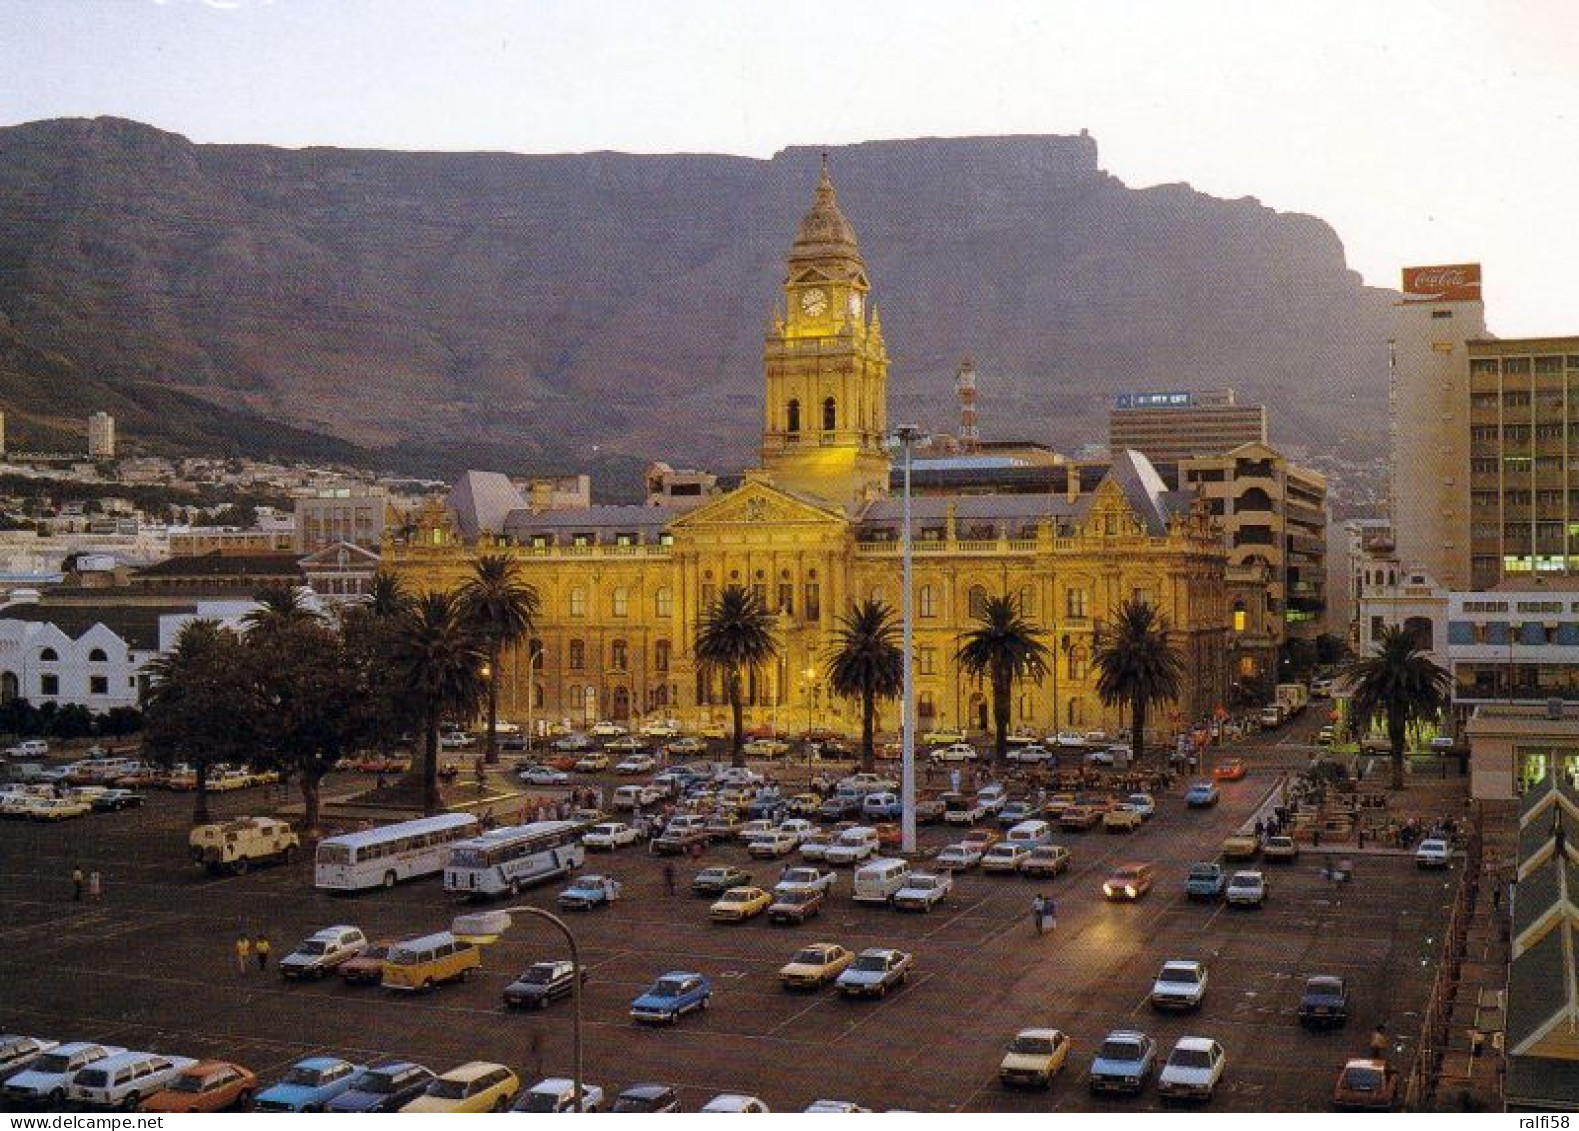 1 AK Südafrika * Das Alte Rathaus In Kapstadt * The Old City Hall Of Cape Town - Erbaut 1905 * - Afrique Du Sud